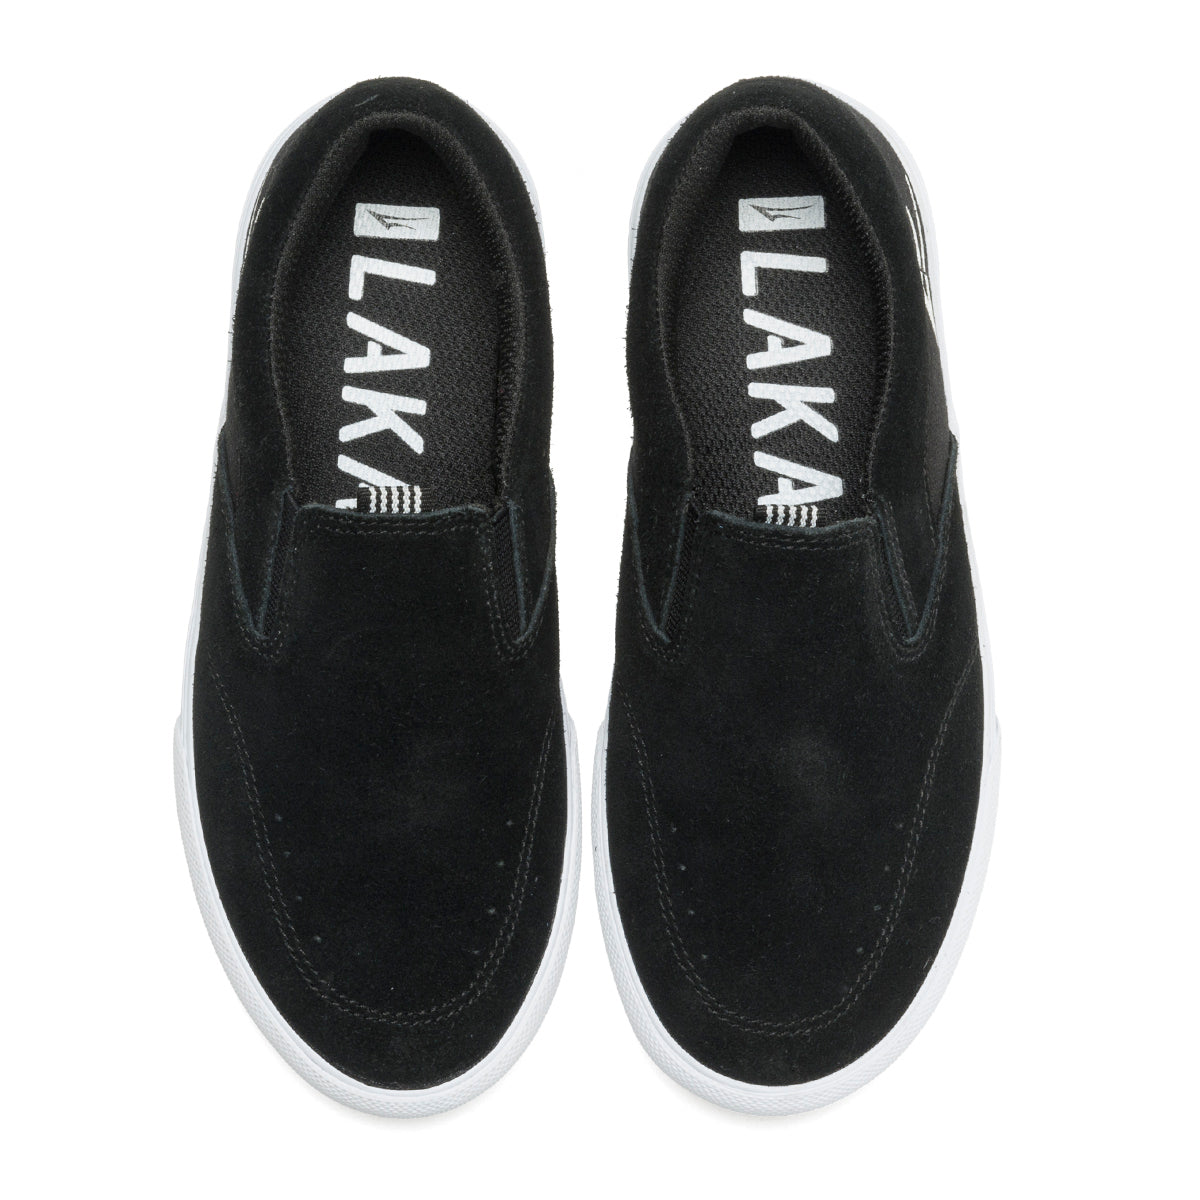 Lakai Owen Kids Skate Shoes - Black/Suede